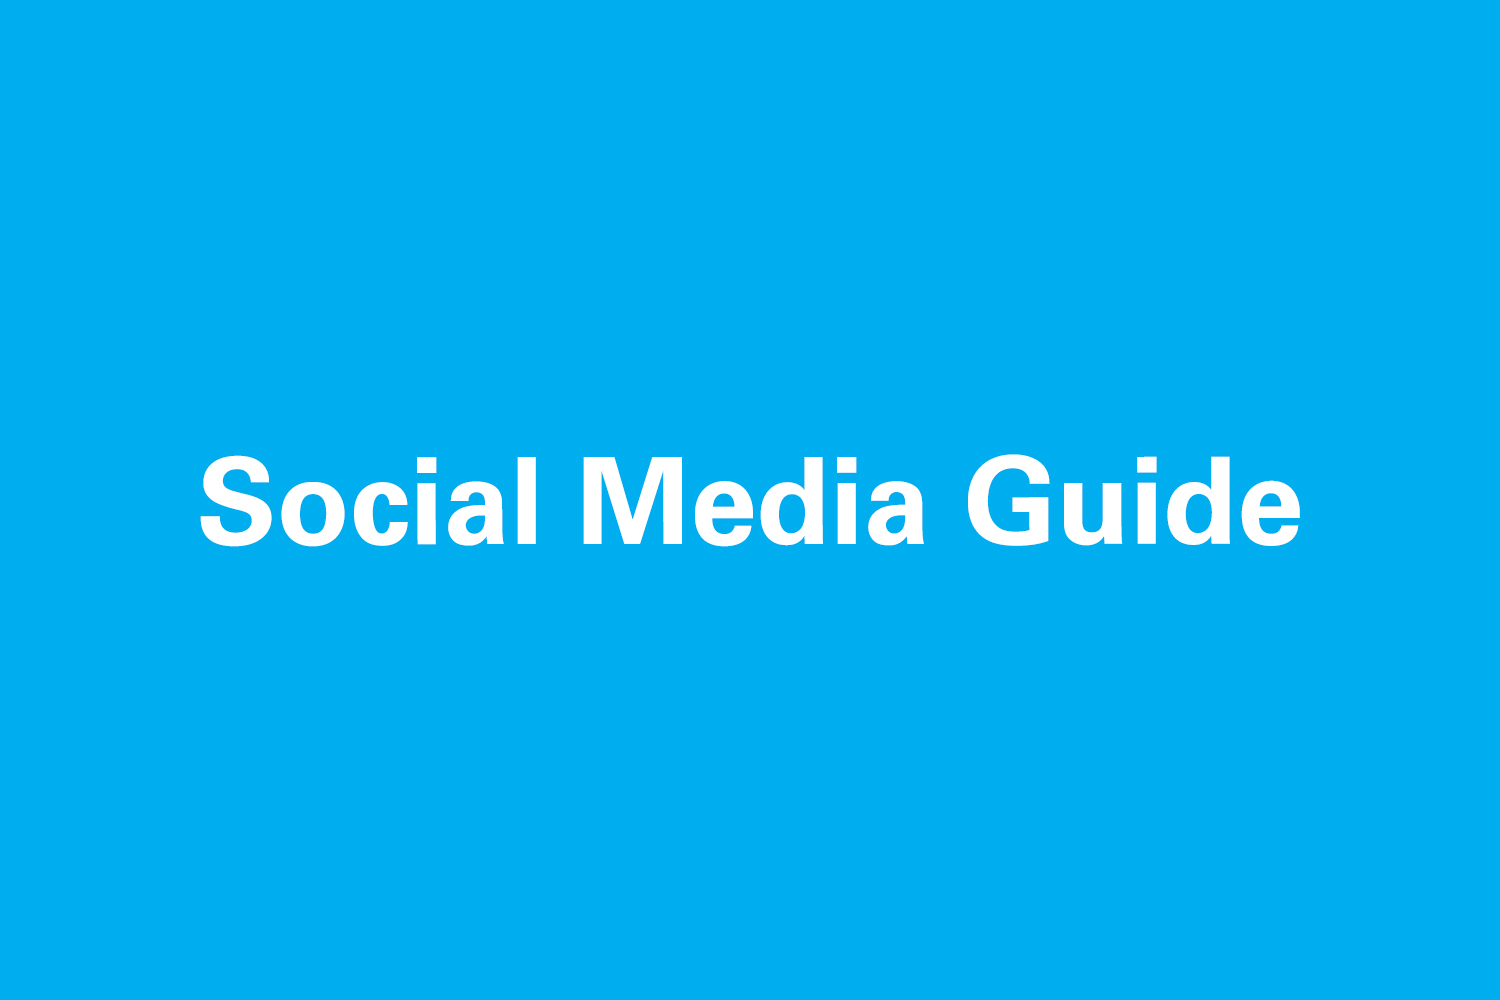 Social Media Guide 2021